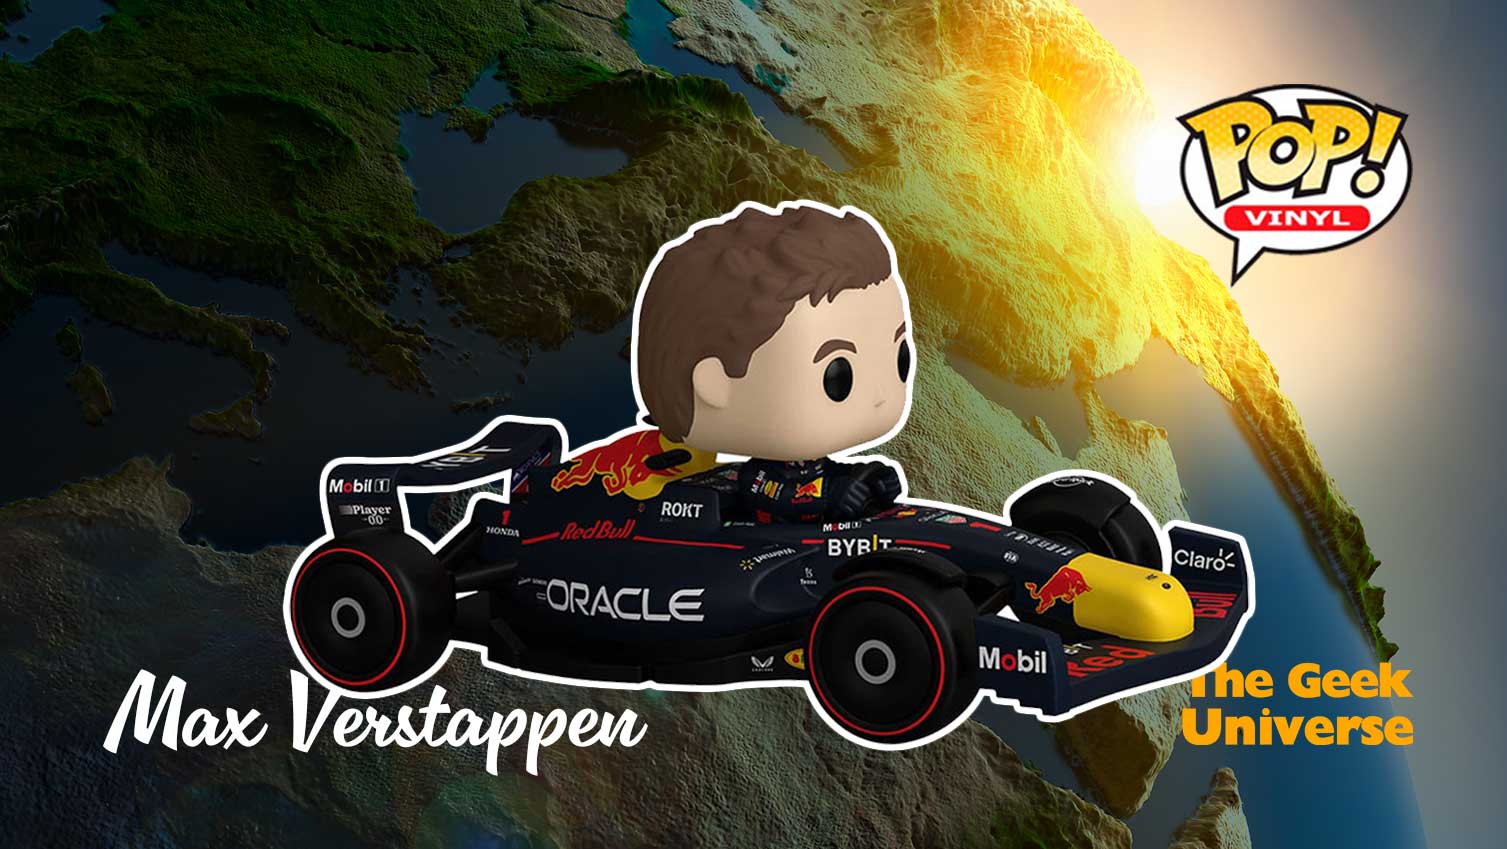 Funko Pop - Figure - Max Verstappen -F1 Racing Redbull - (1